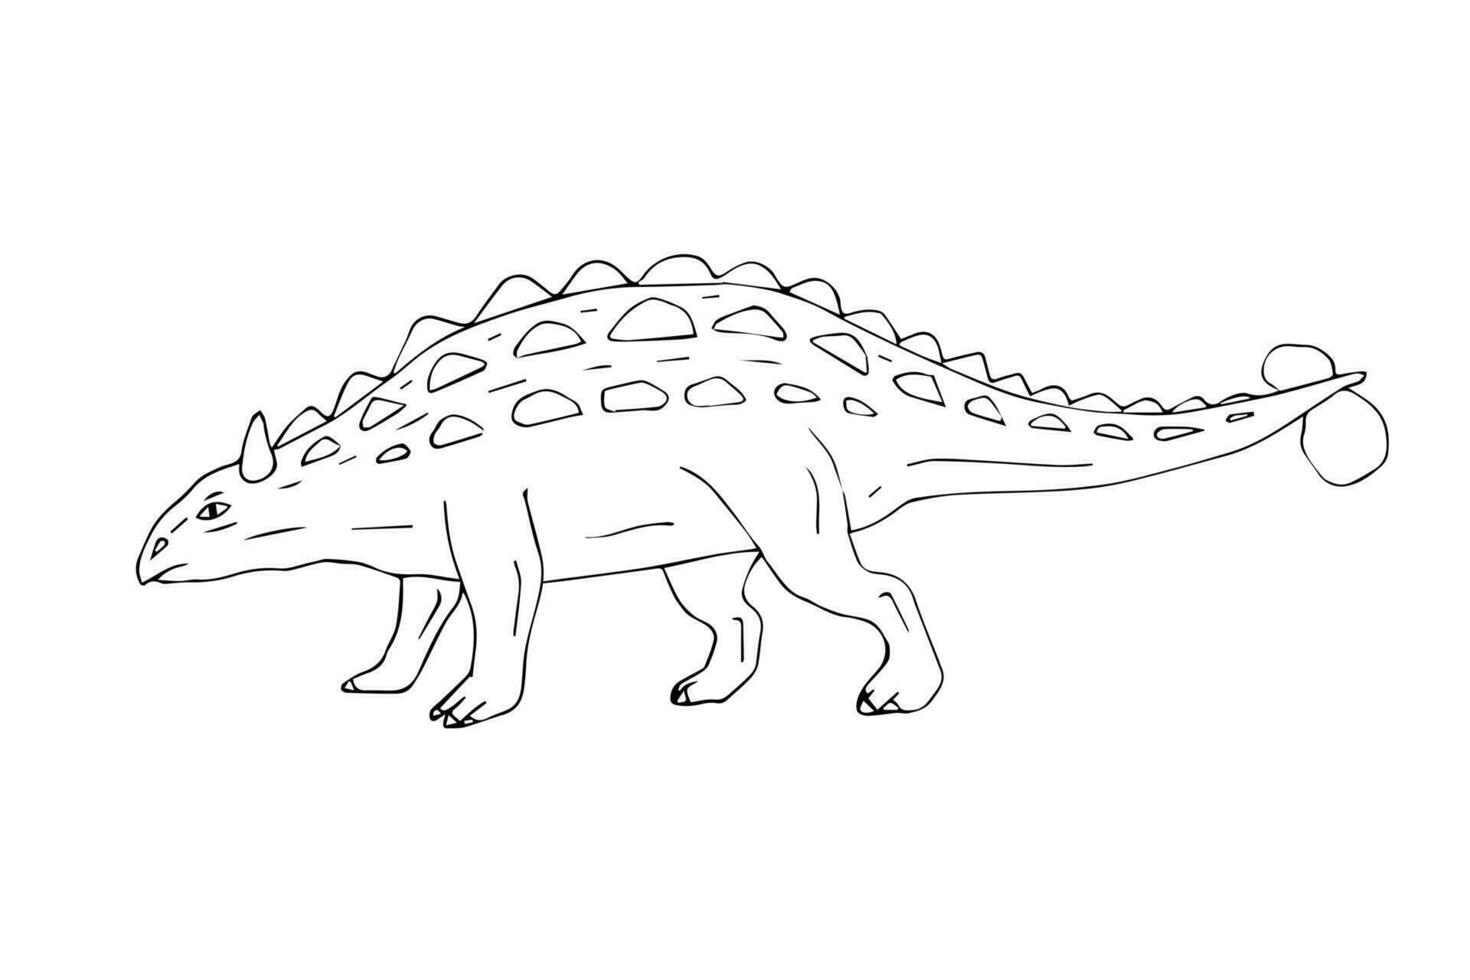 vektor hand dragen ankylosaurus dinosaurie